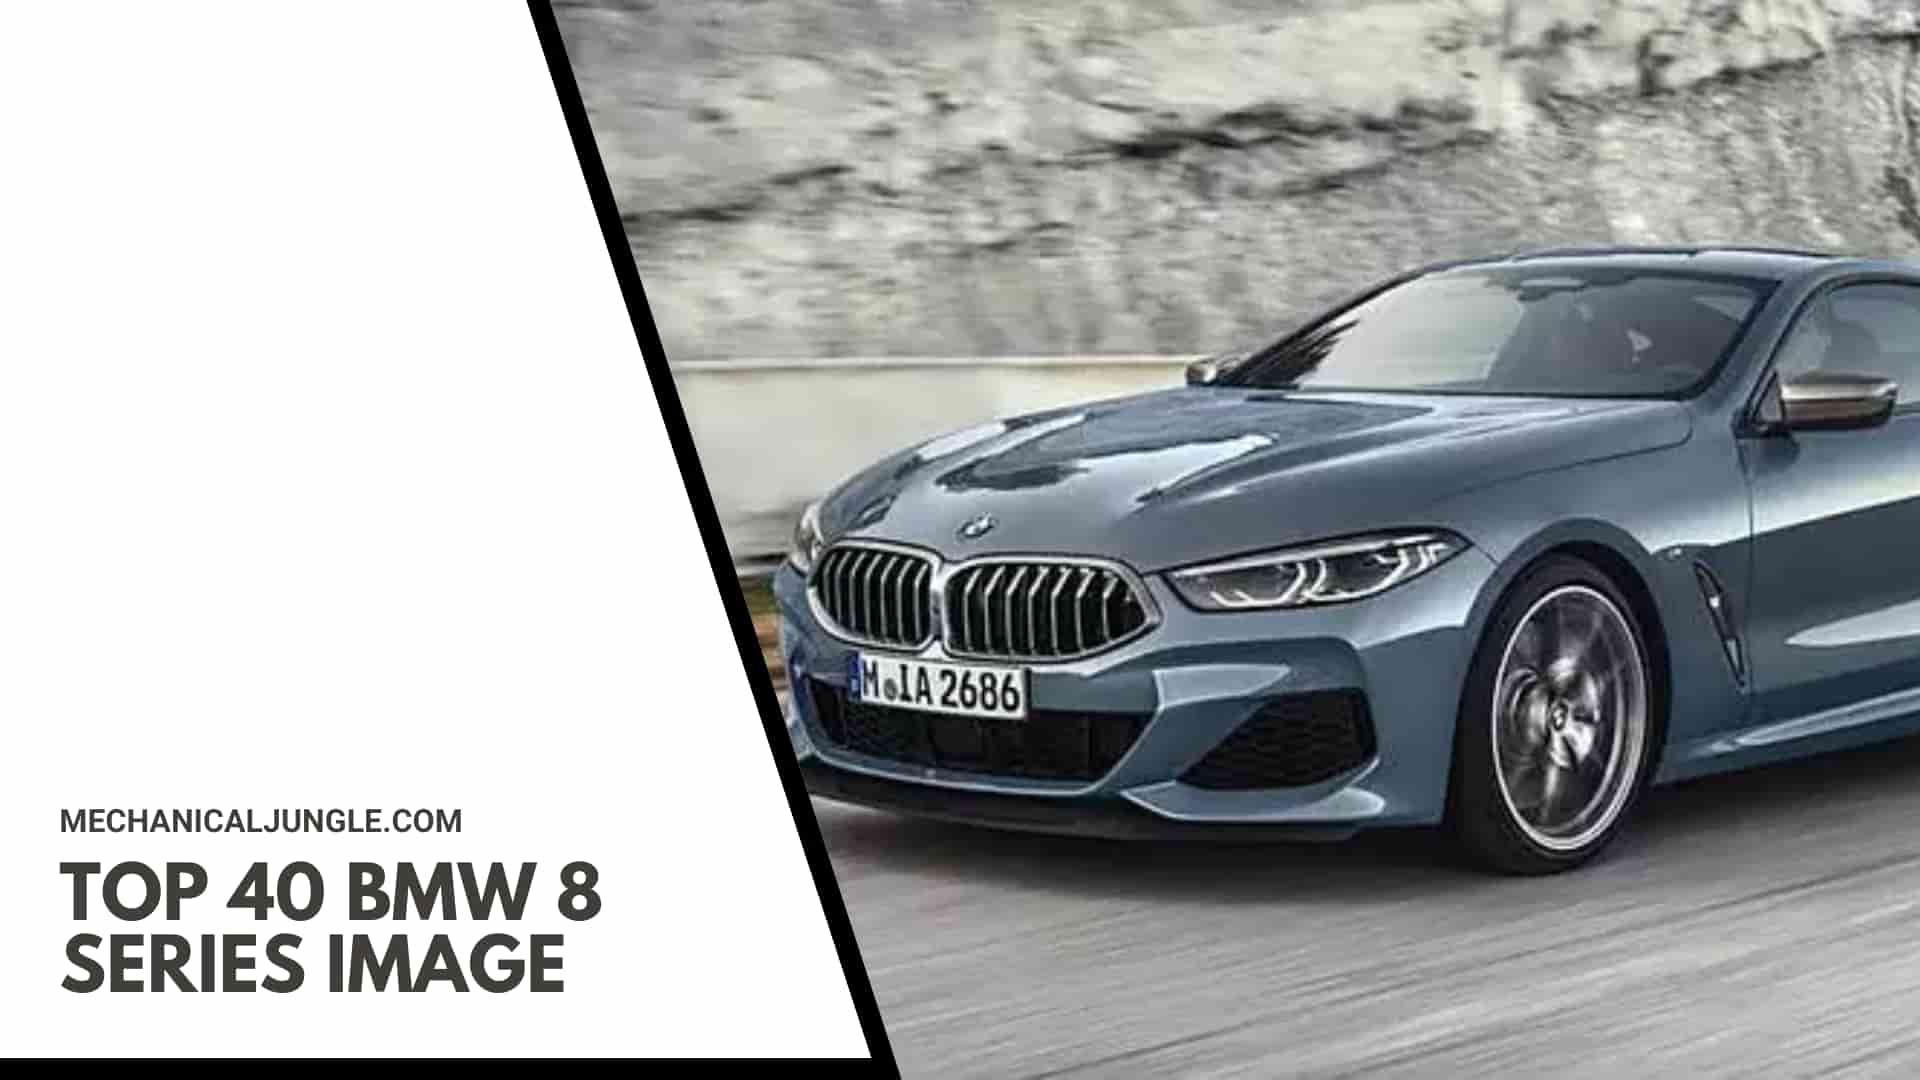 Top 40 BMW 8 Series Image